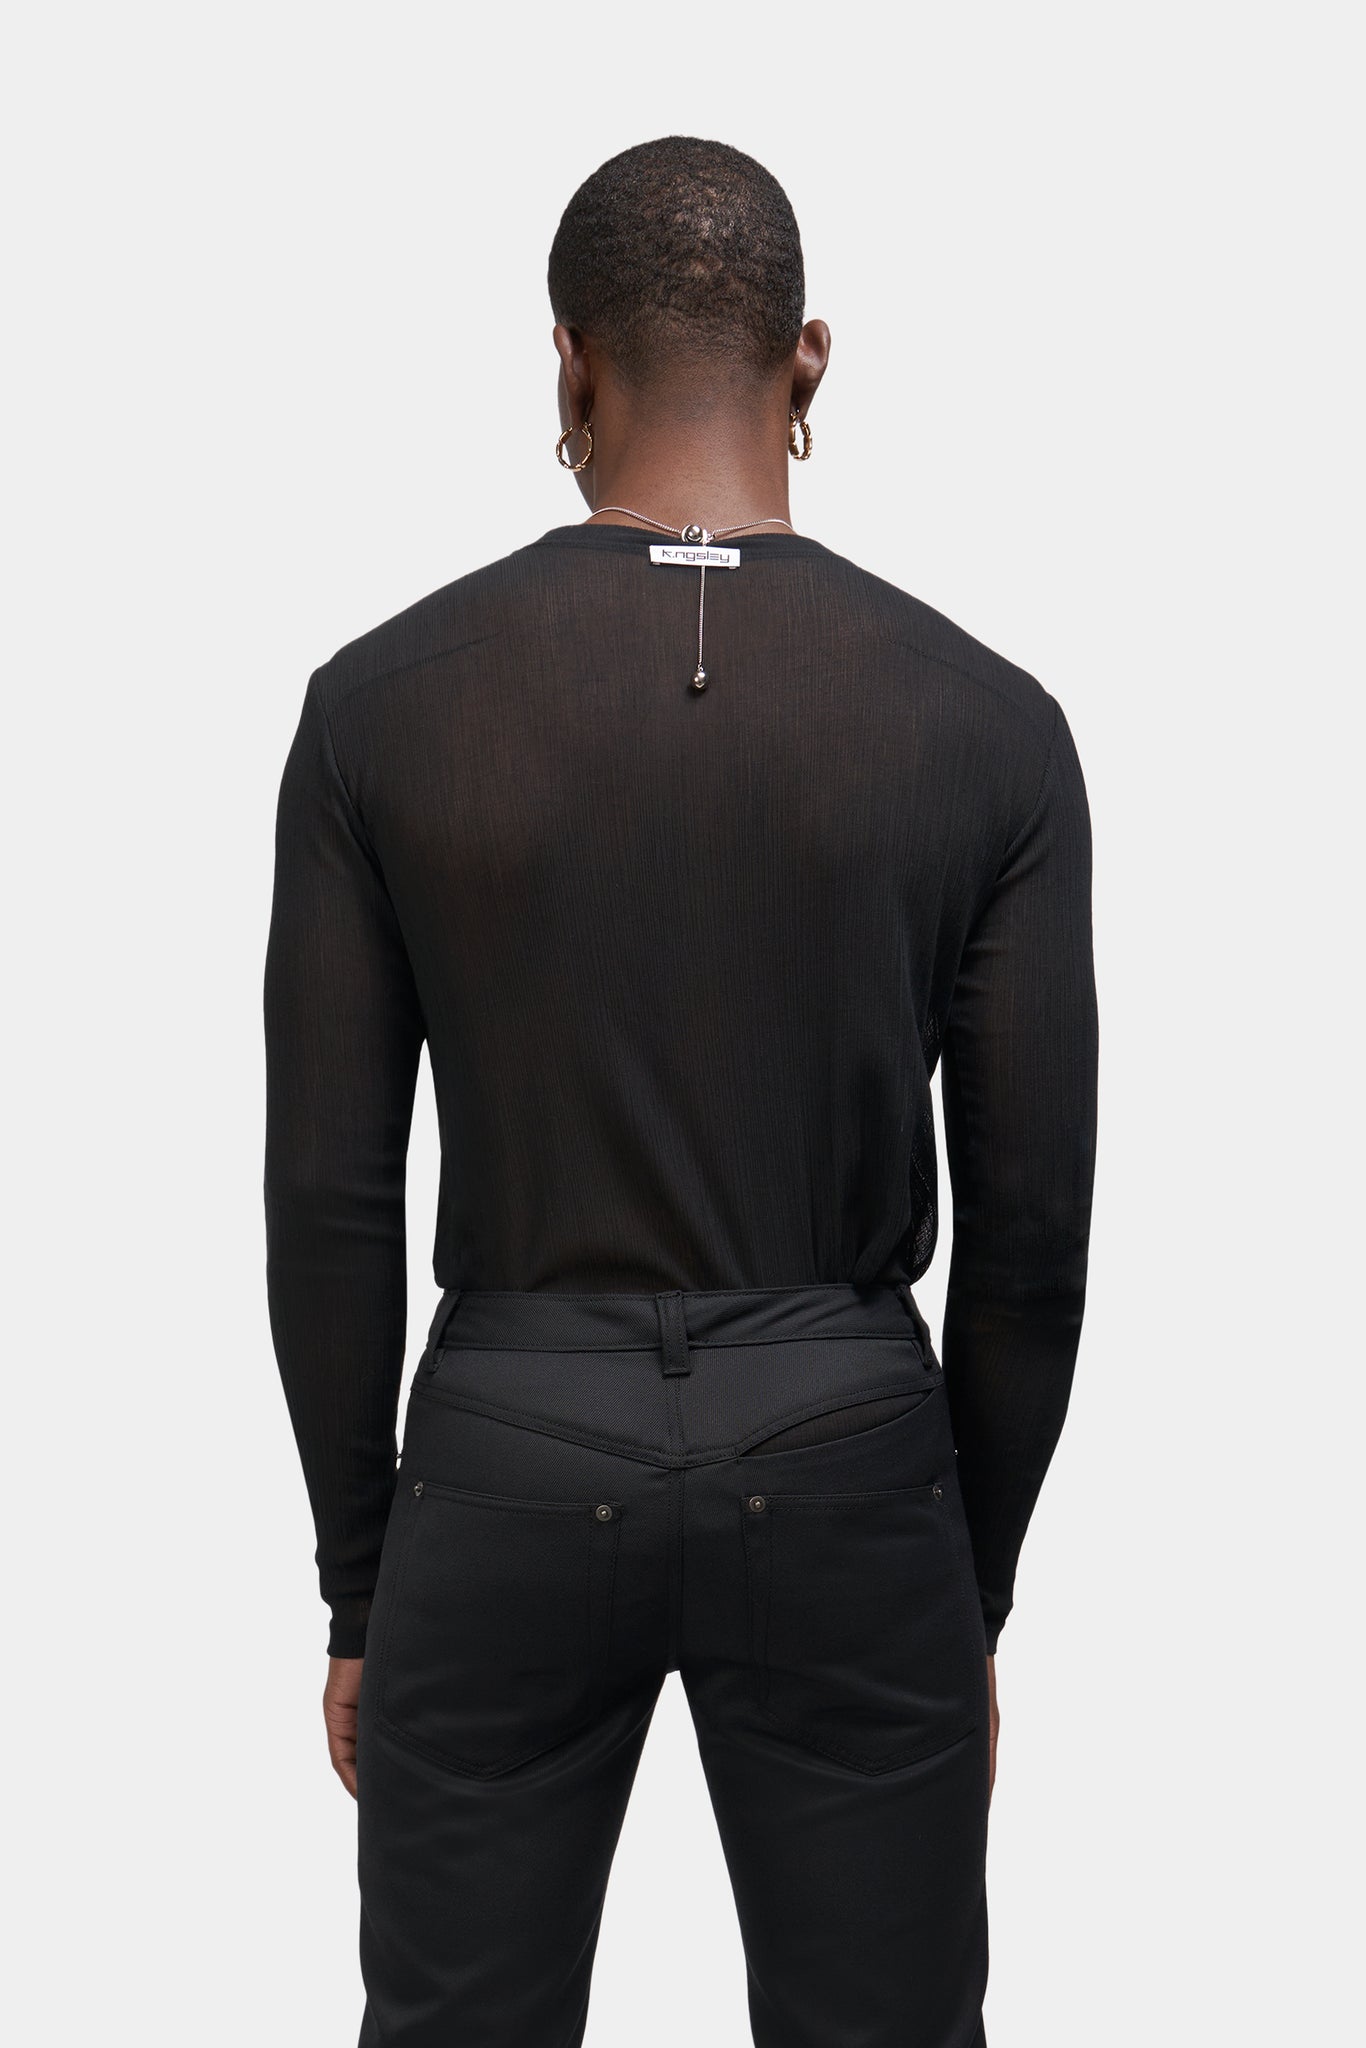 Black "Uncut" Long Sleeve Shirt